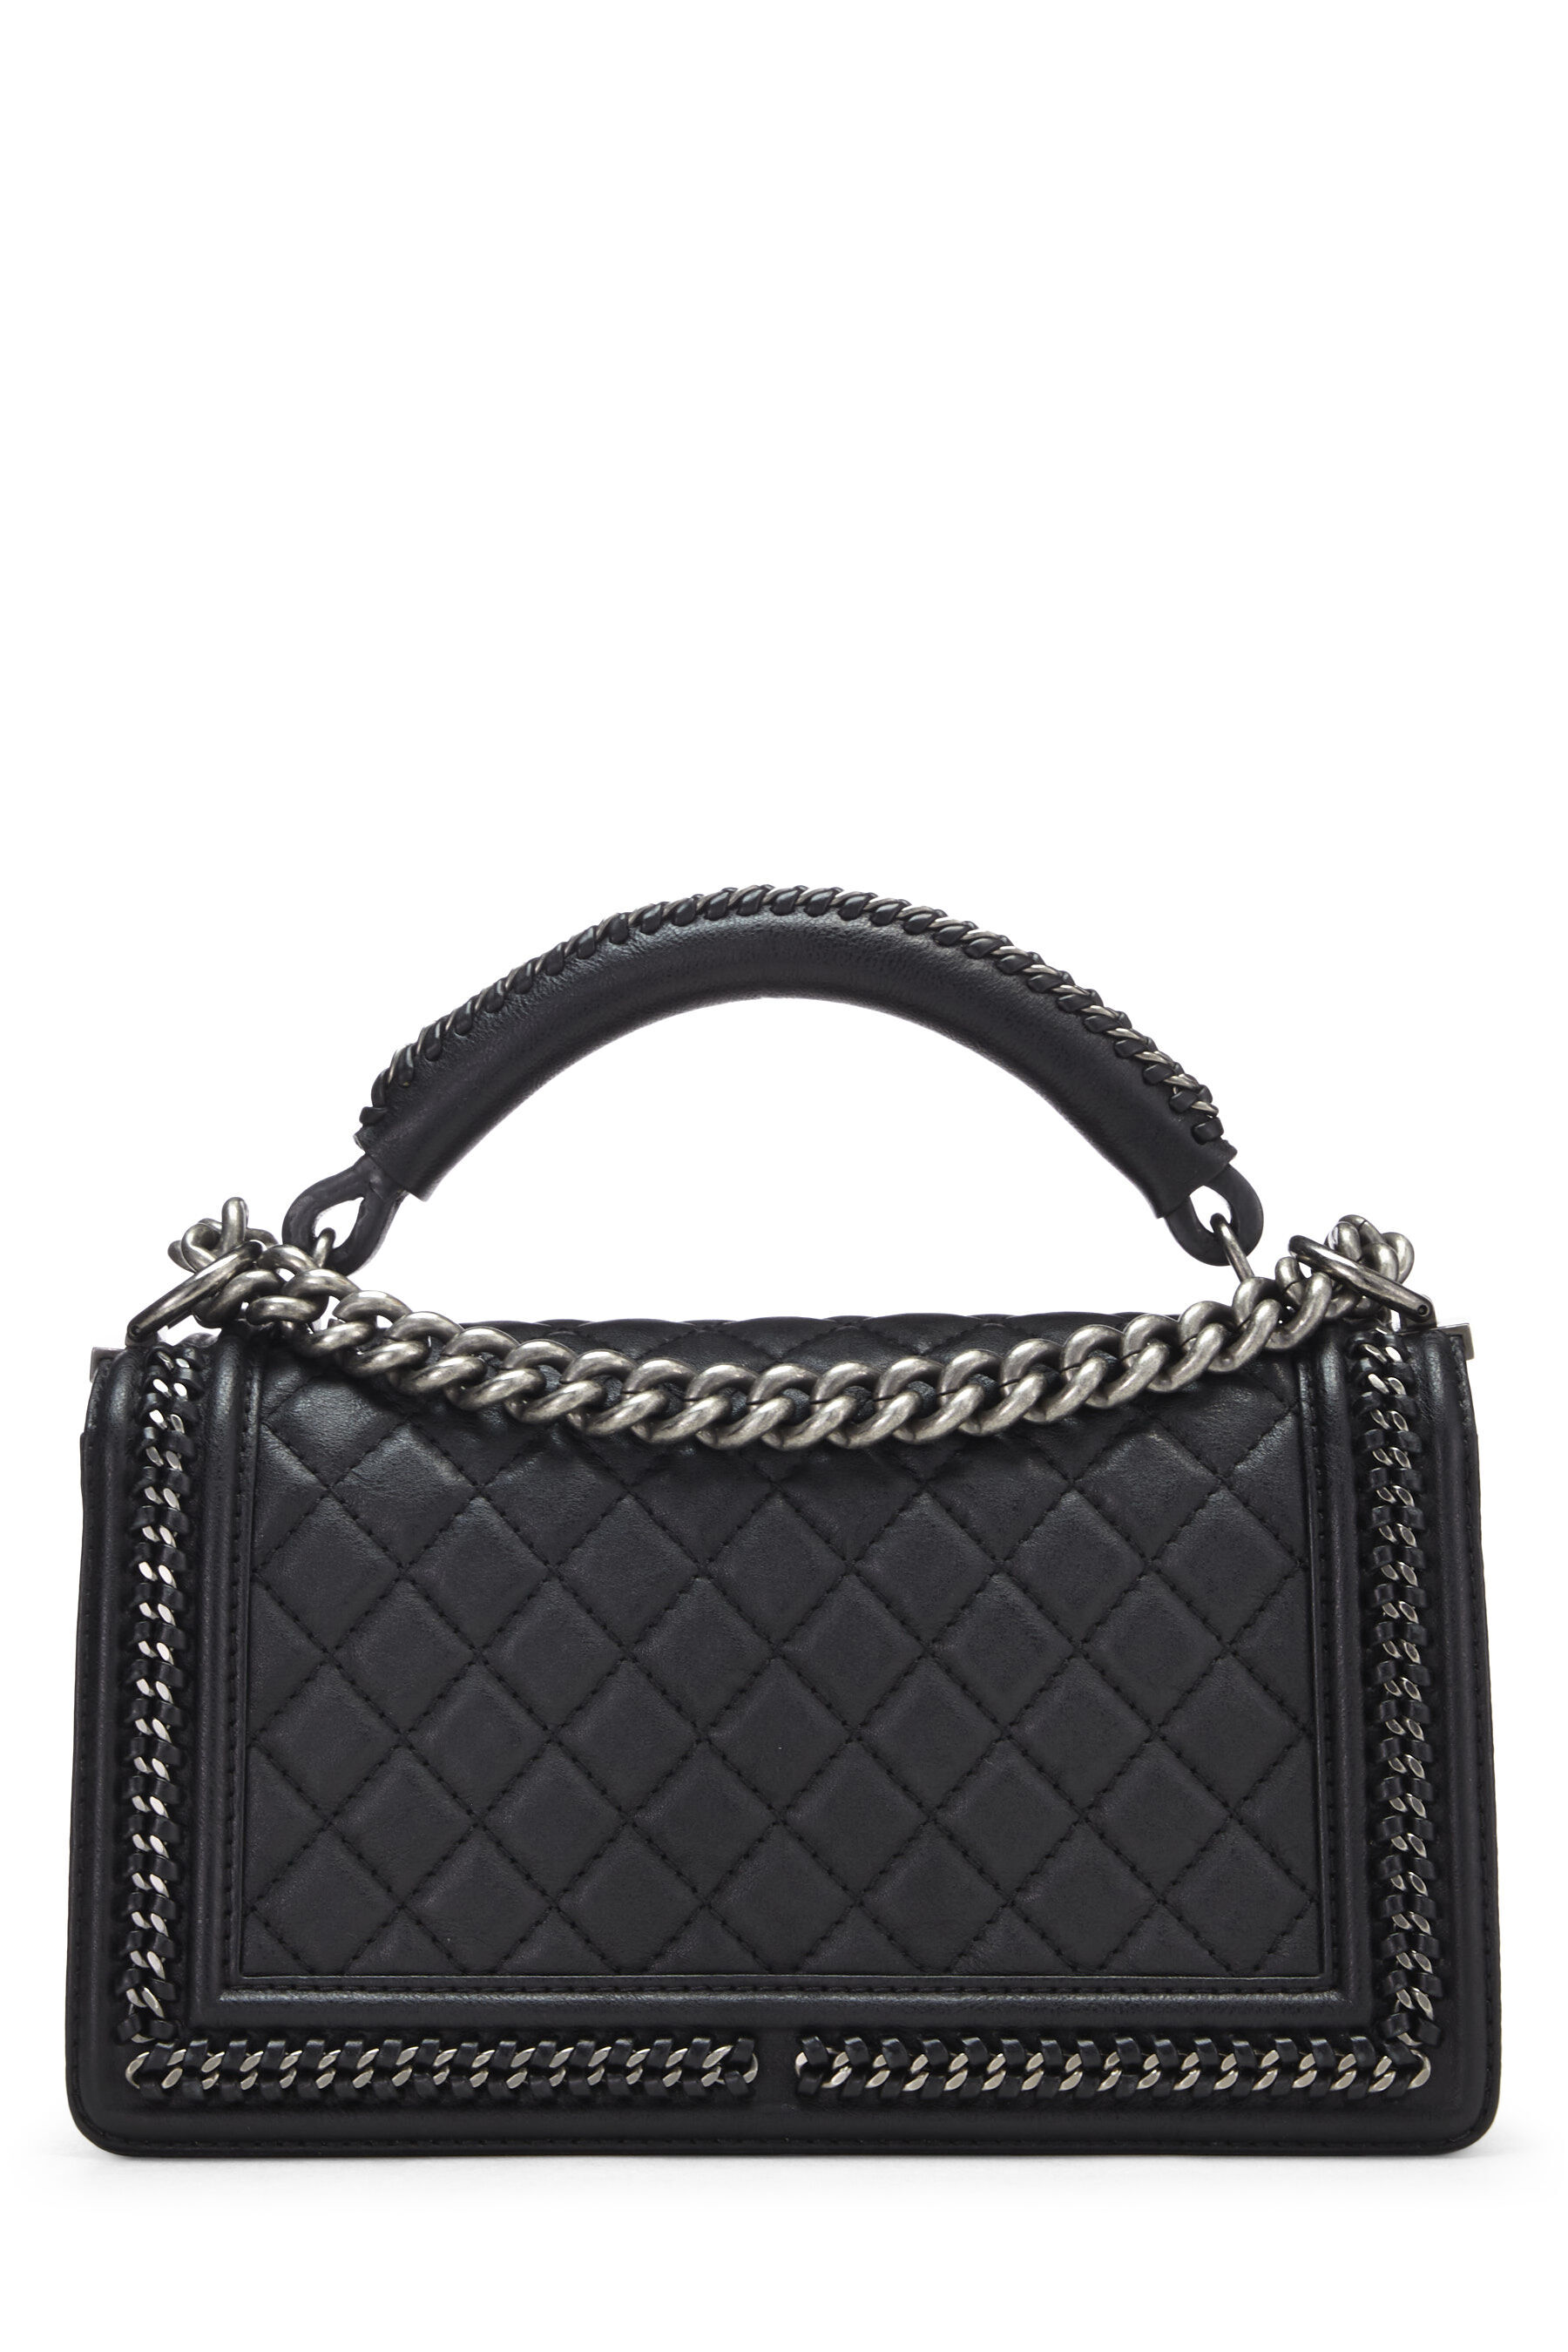 Chanel Classic Medium Boy Bag in Lambskin Black  LuxuryPromise